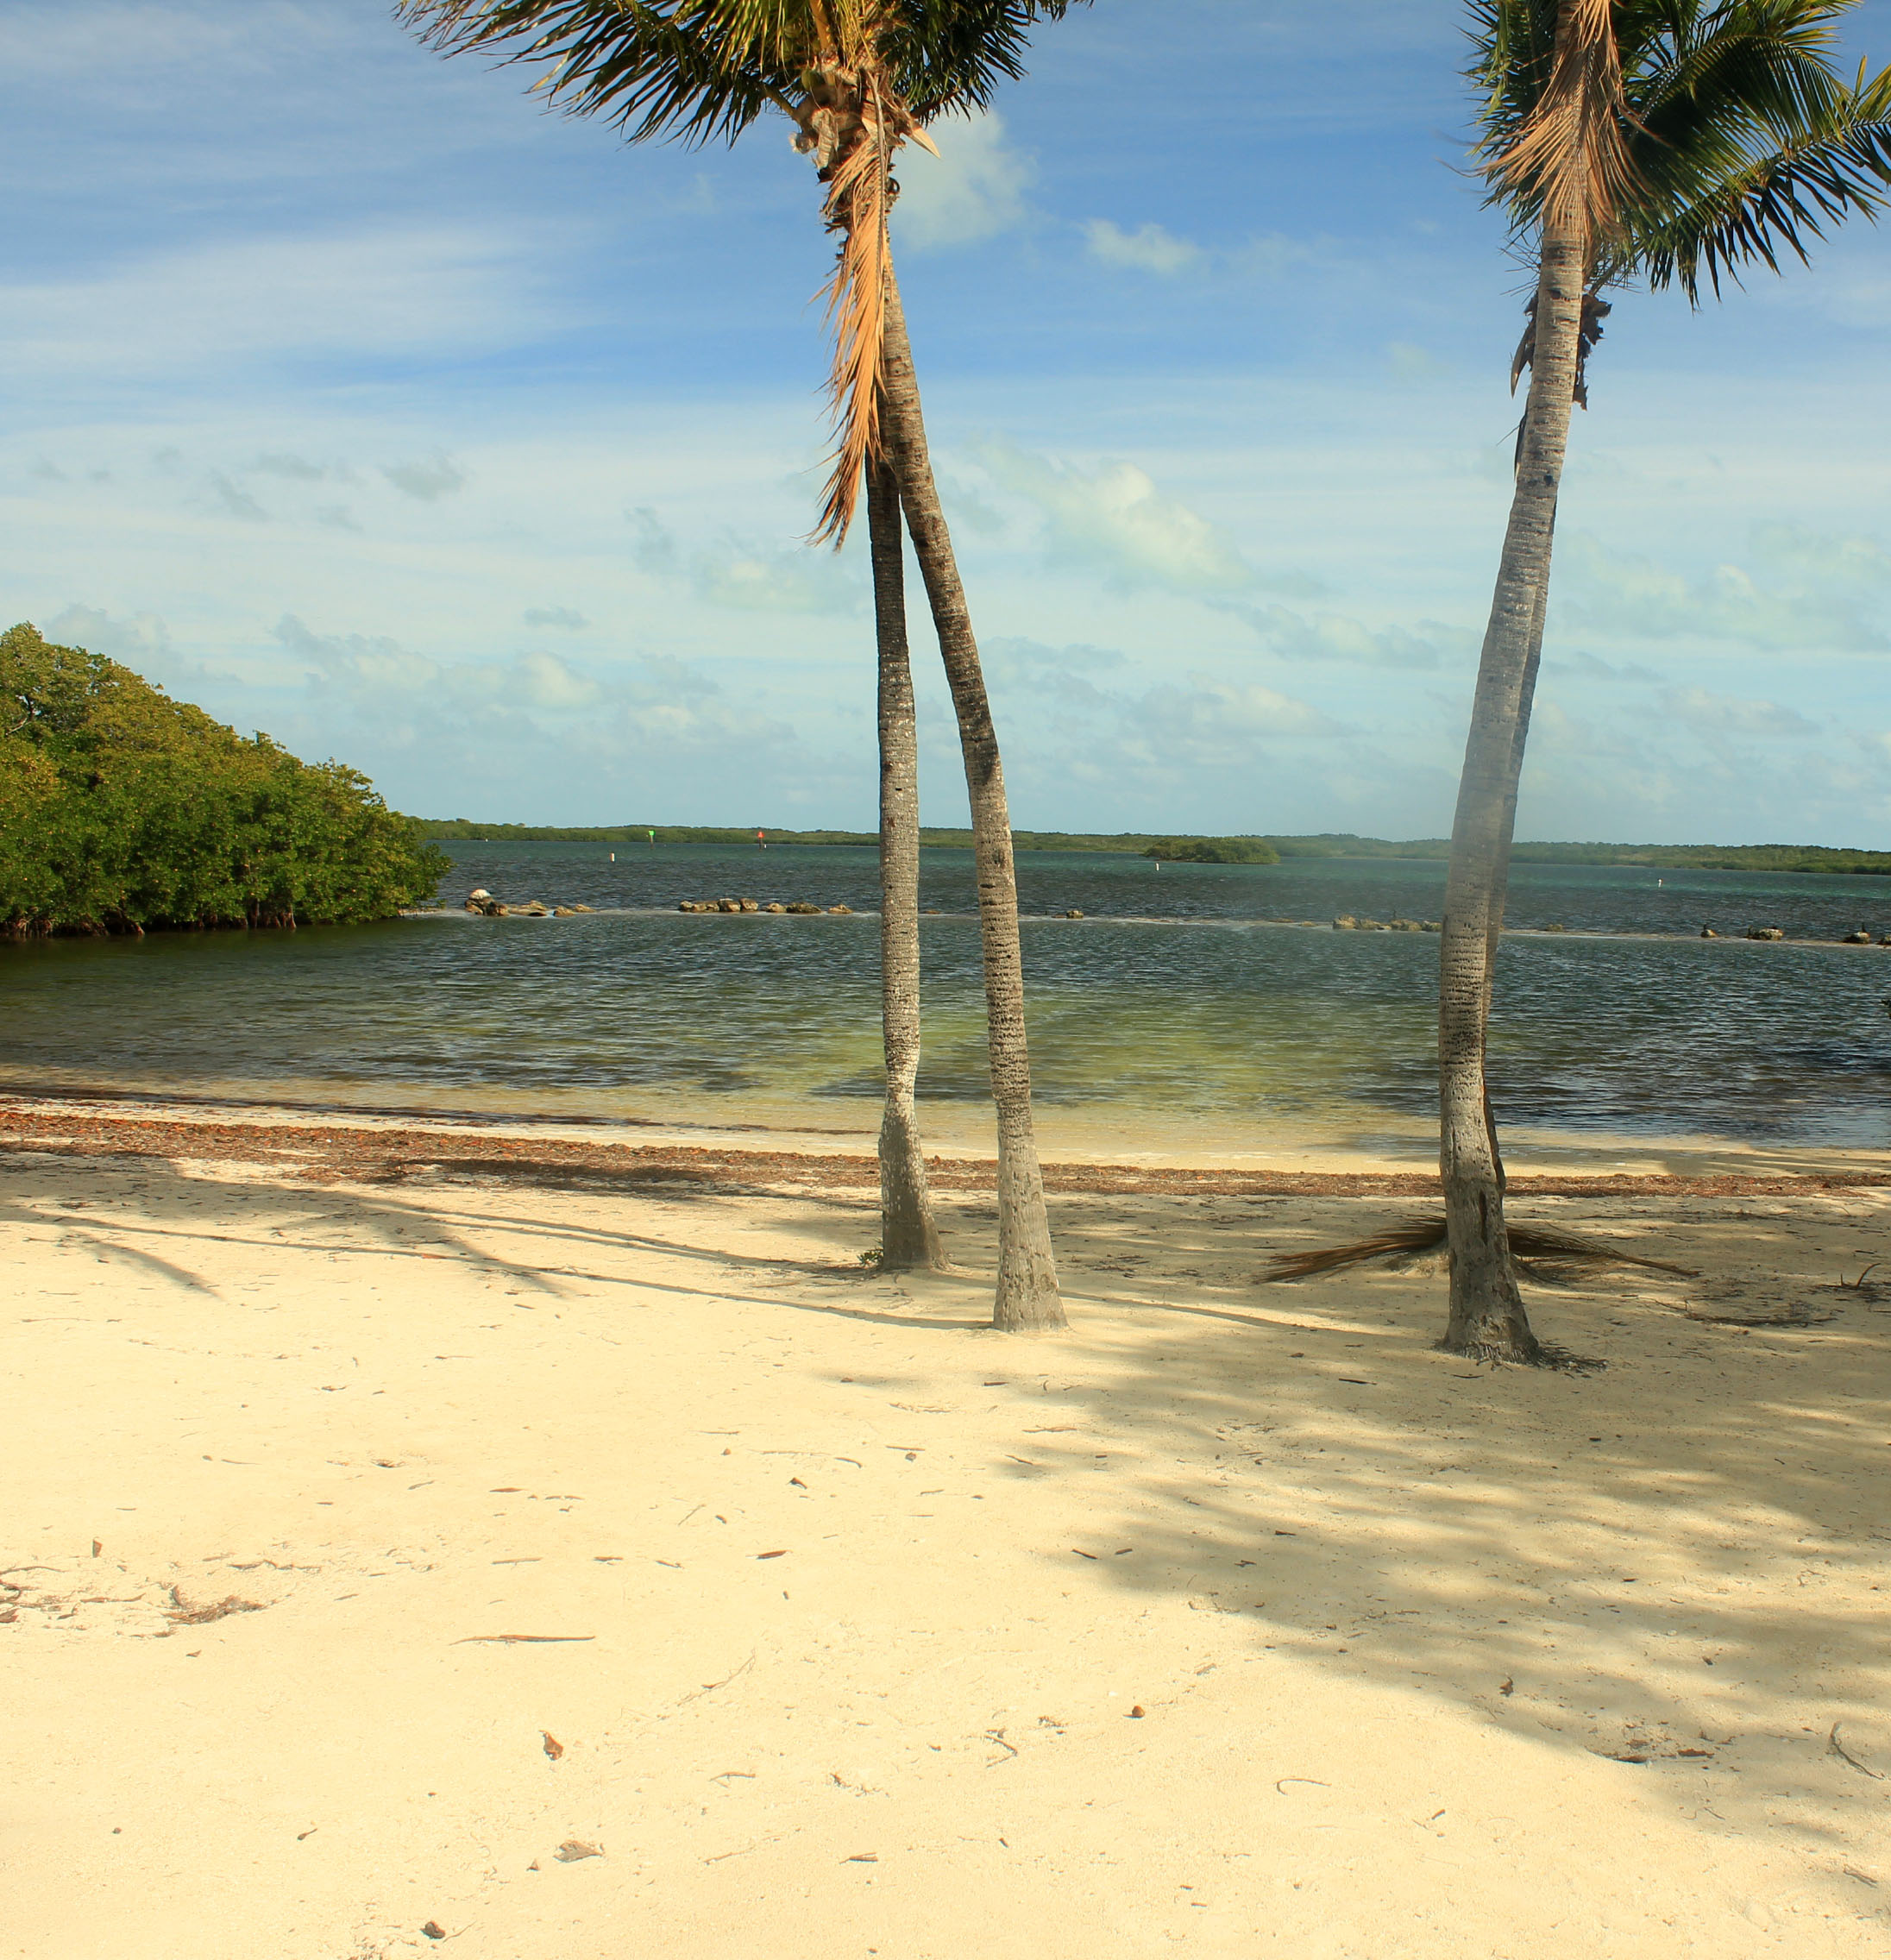 Gfp-florida-keys-key-largo-beach-and-trees.jpg